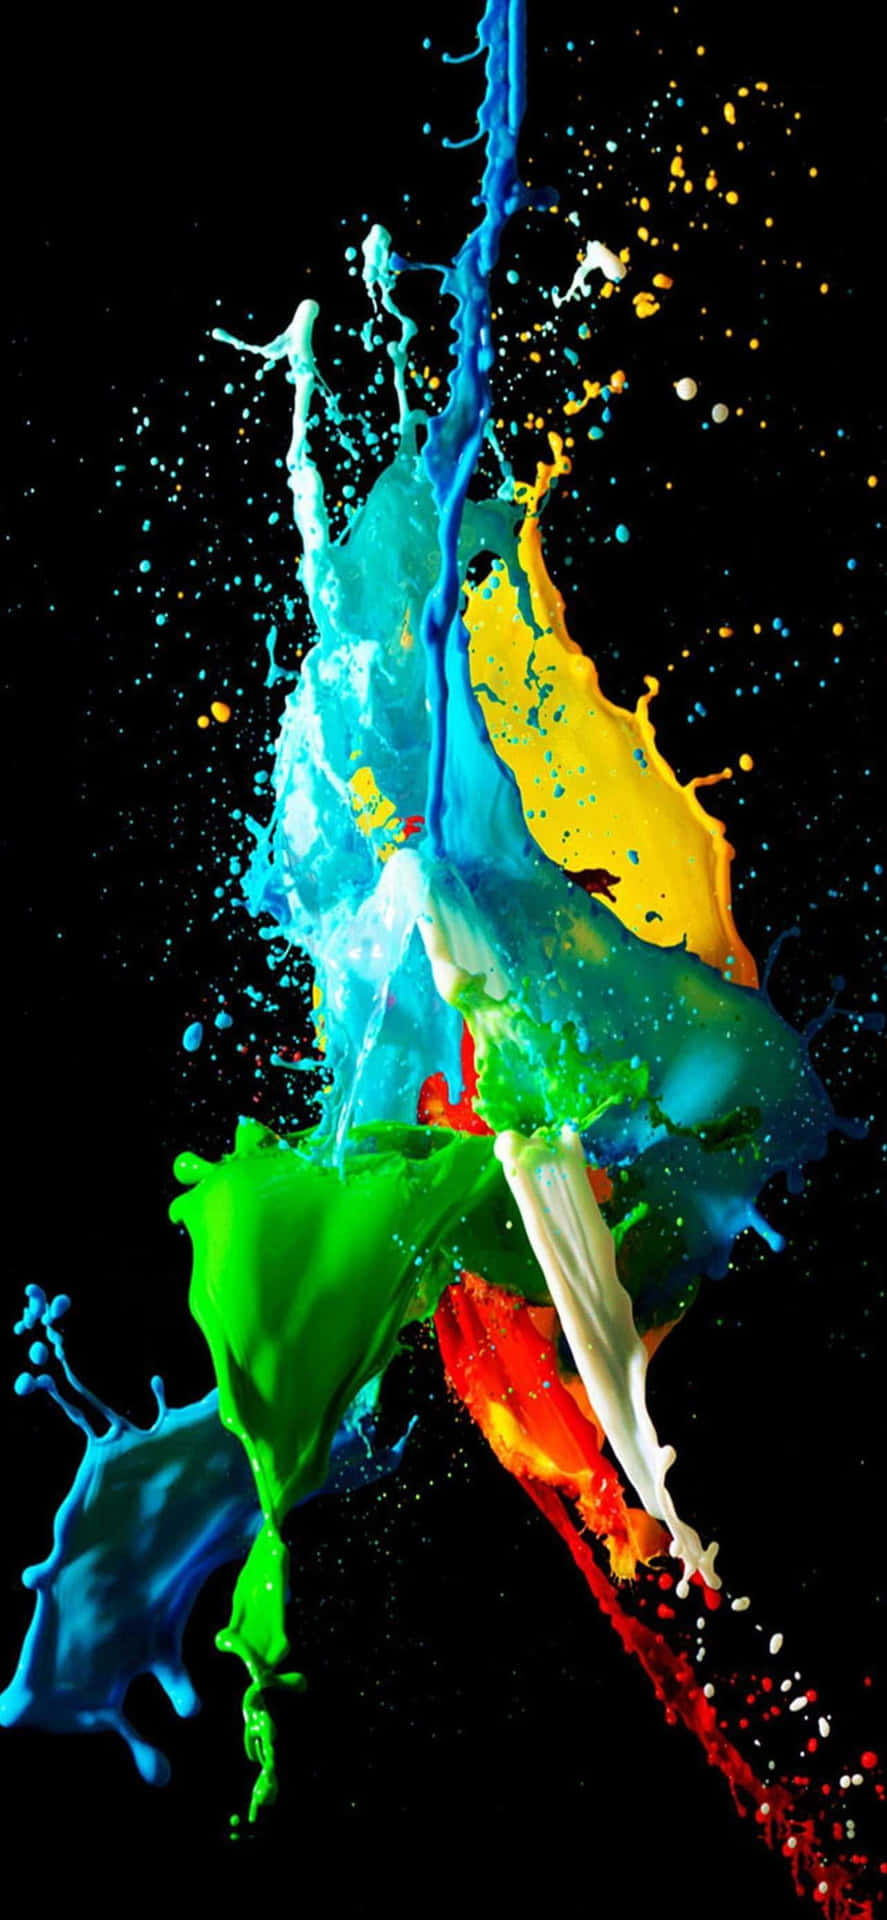 A Colorful Splash Of Paint